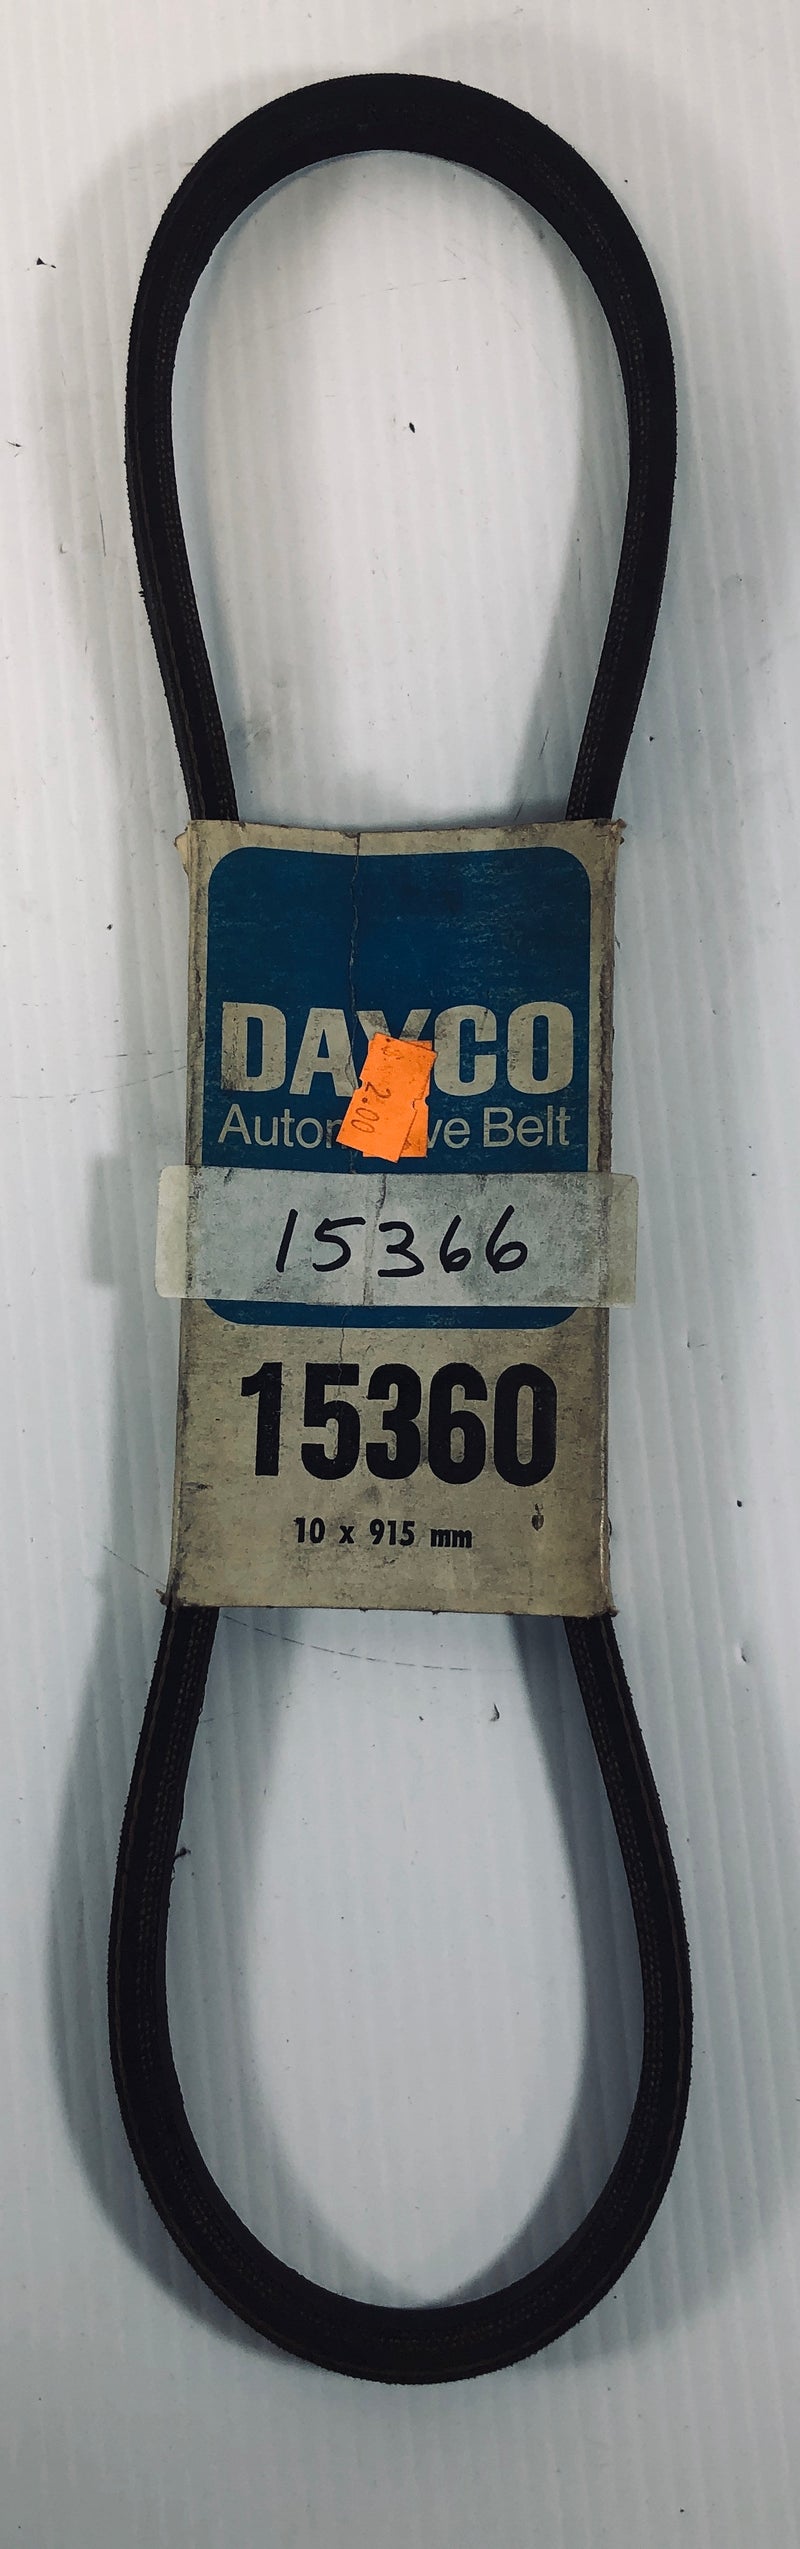 Dayco Belt 10 x 915mm 15360